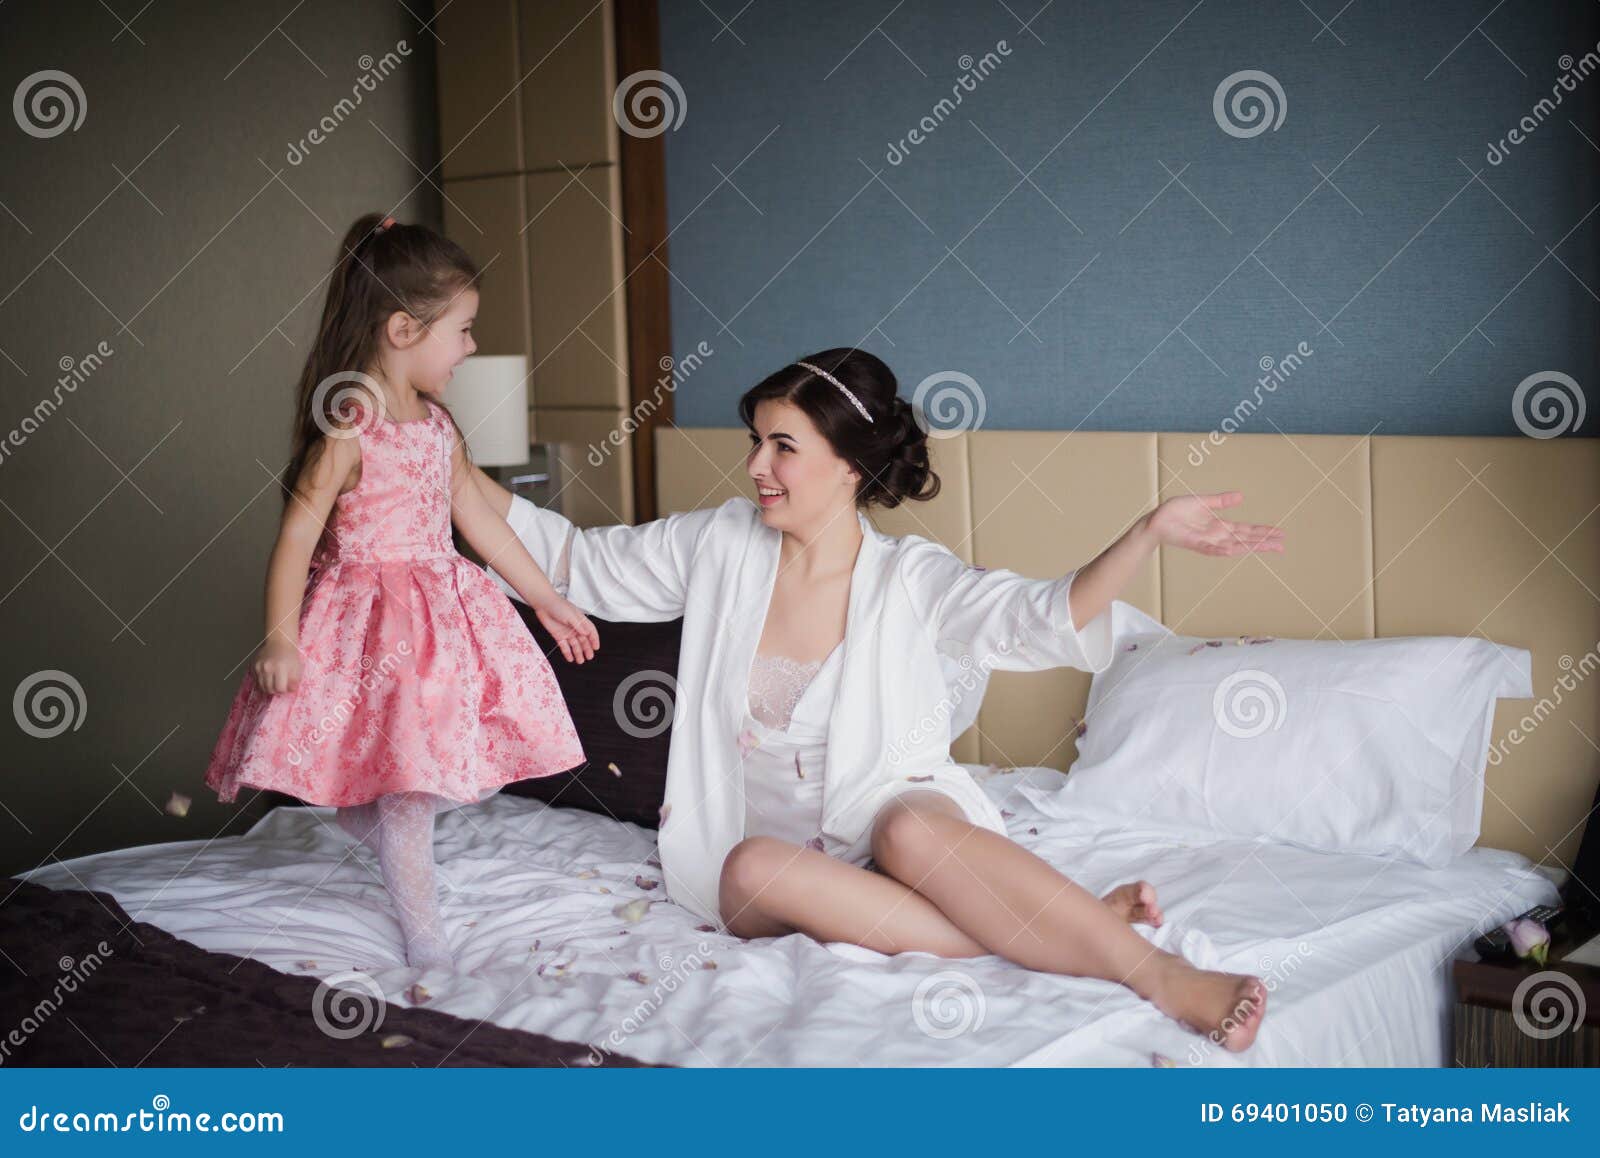 Мать наказала дочку. Мамас дочкой накрлвати. Фотосессия с дочкой на кровати. Мама с дочкой на кровати. Мама с дочкой фотосессия на кровати.